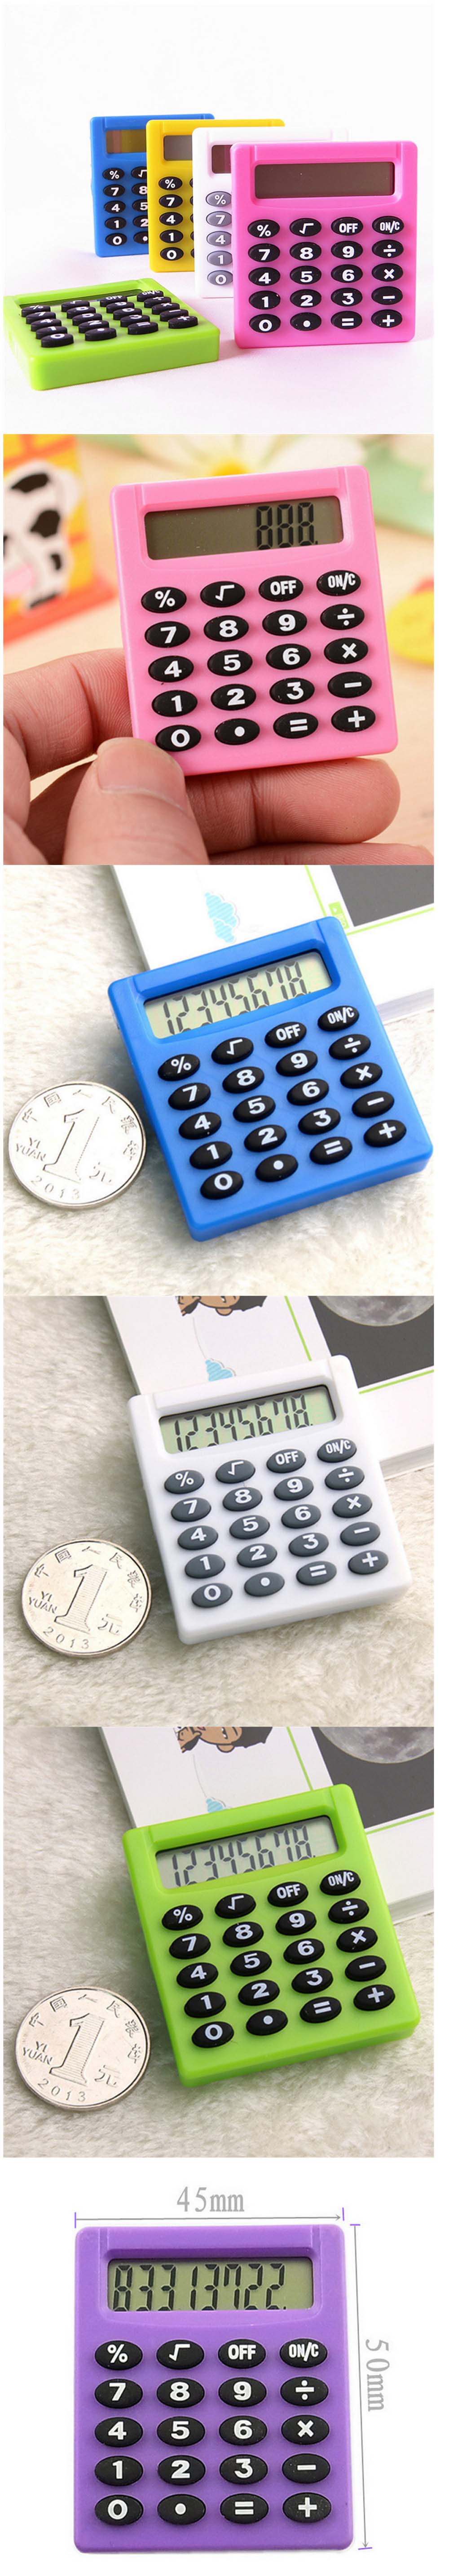 Pocket-Cartoon-Mini-Calculator-Handheld-Pocket-Type-Coin-Batteries-Calculator-1361336